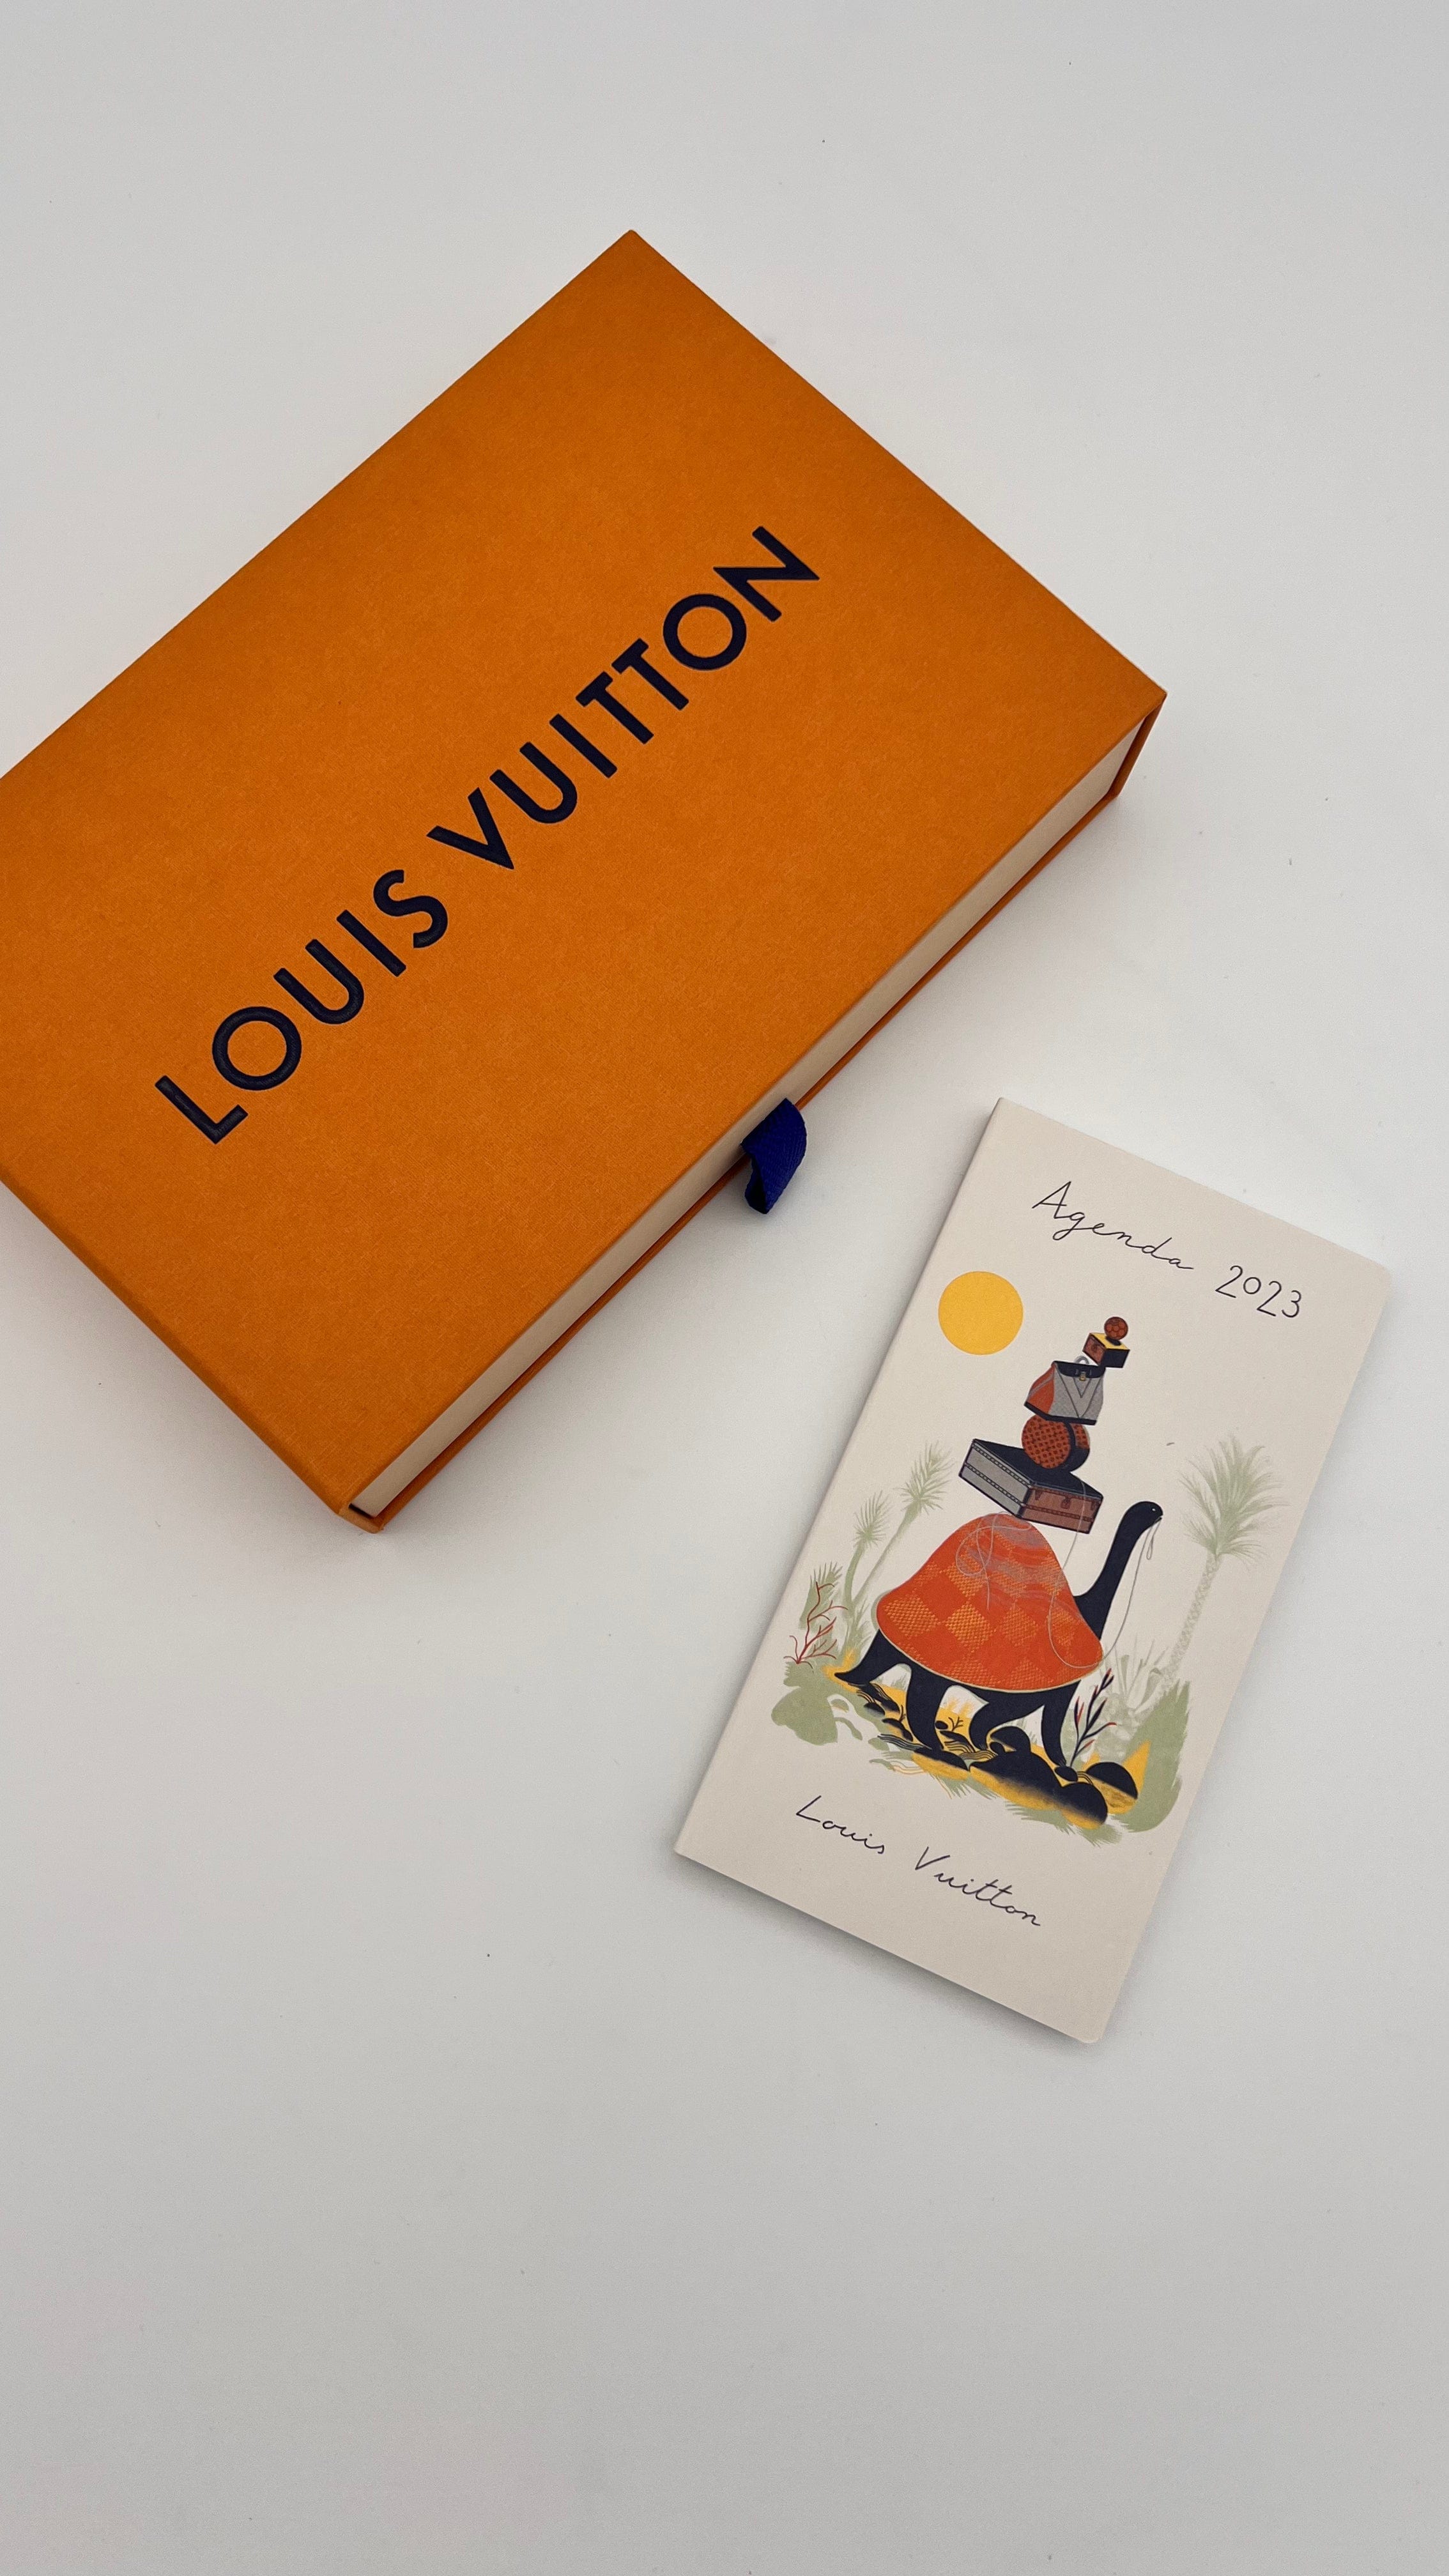 Louis Vuitton Pocket Agenda: Agenda Refill Options & My Final